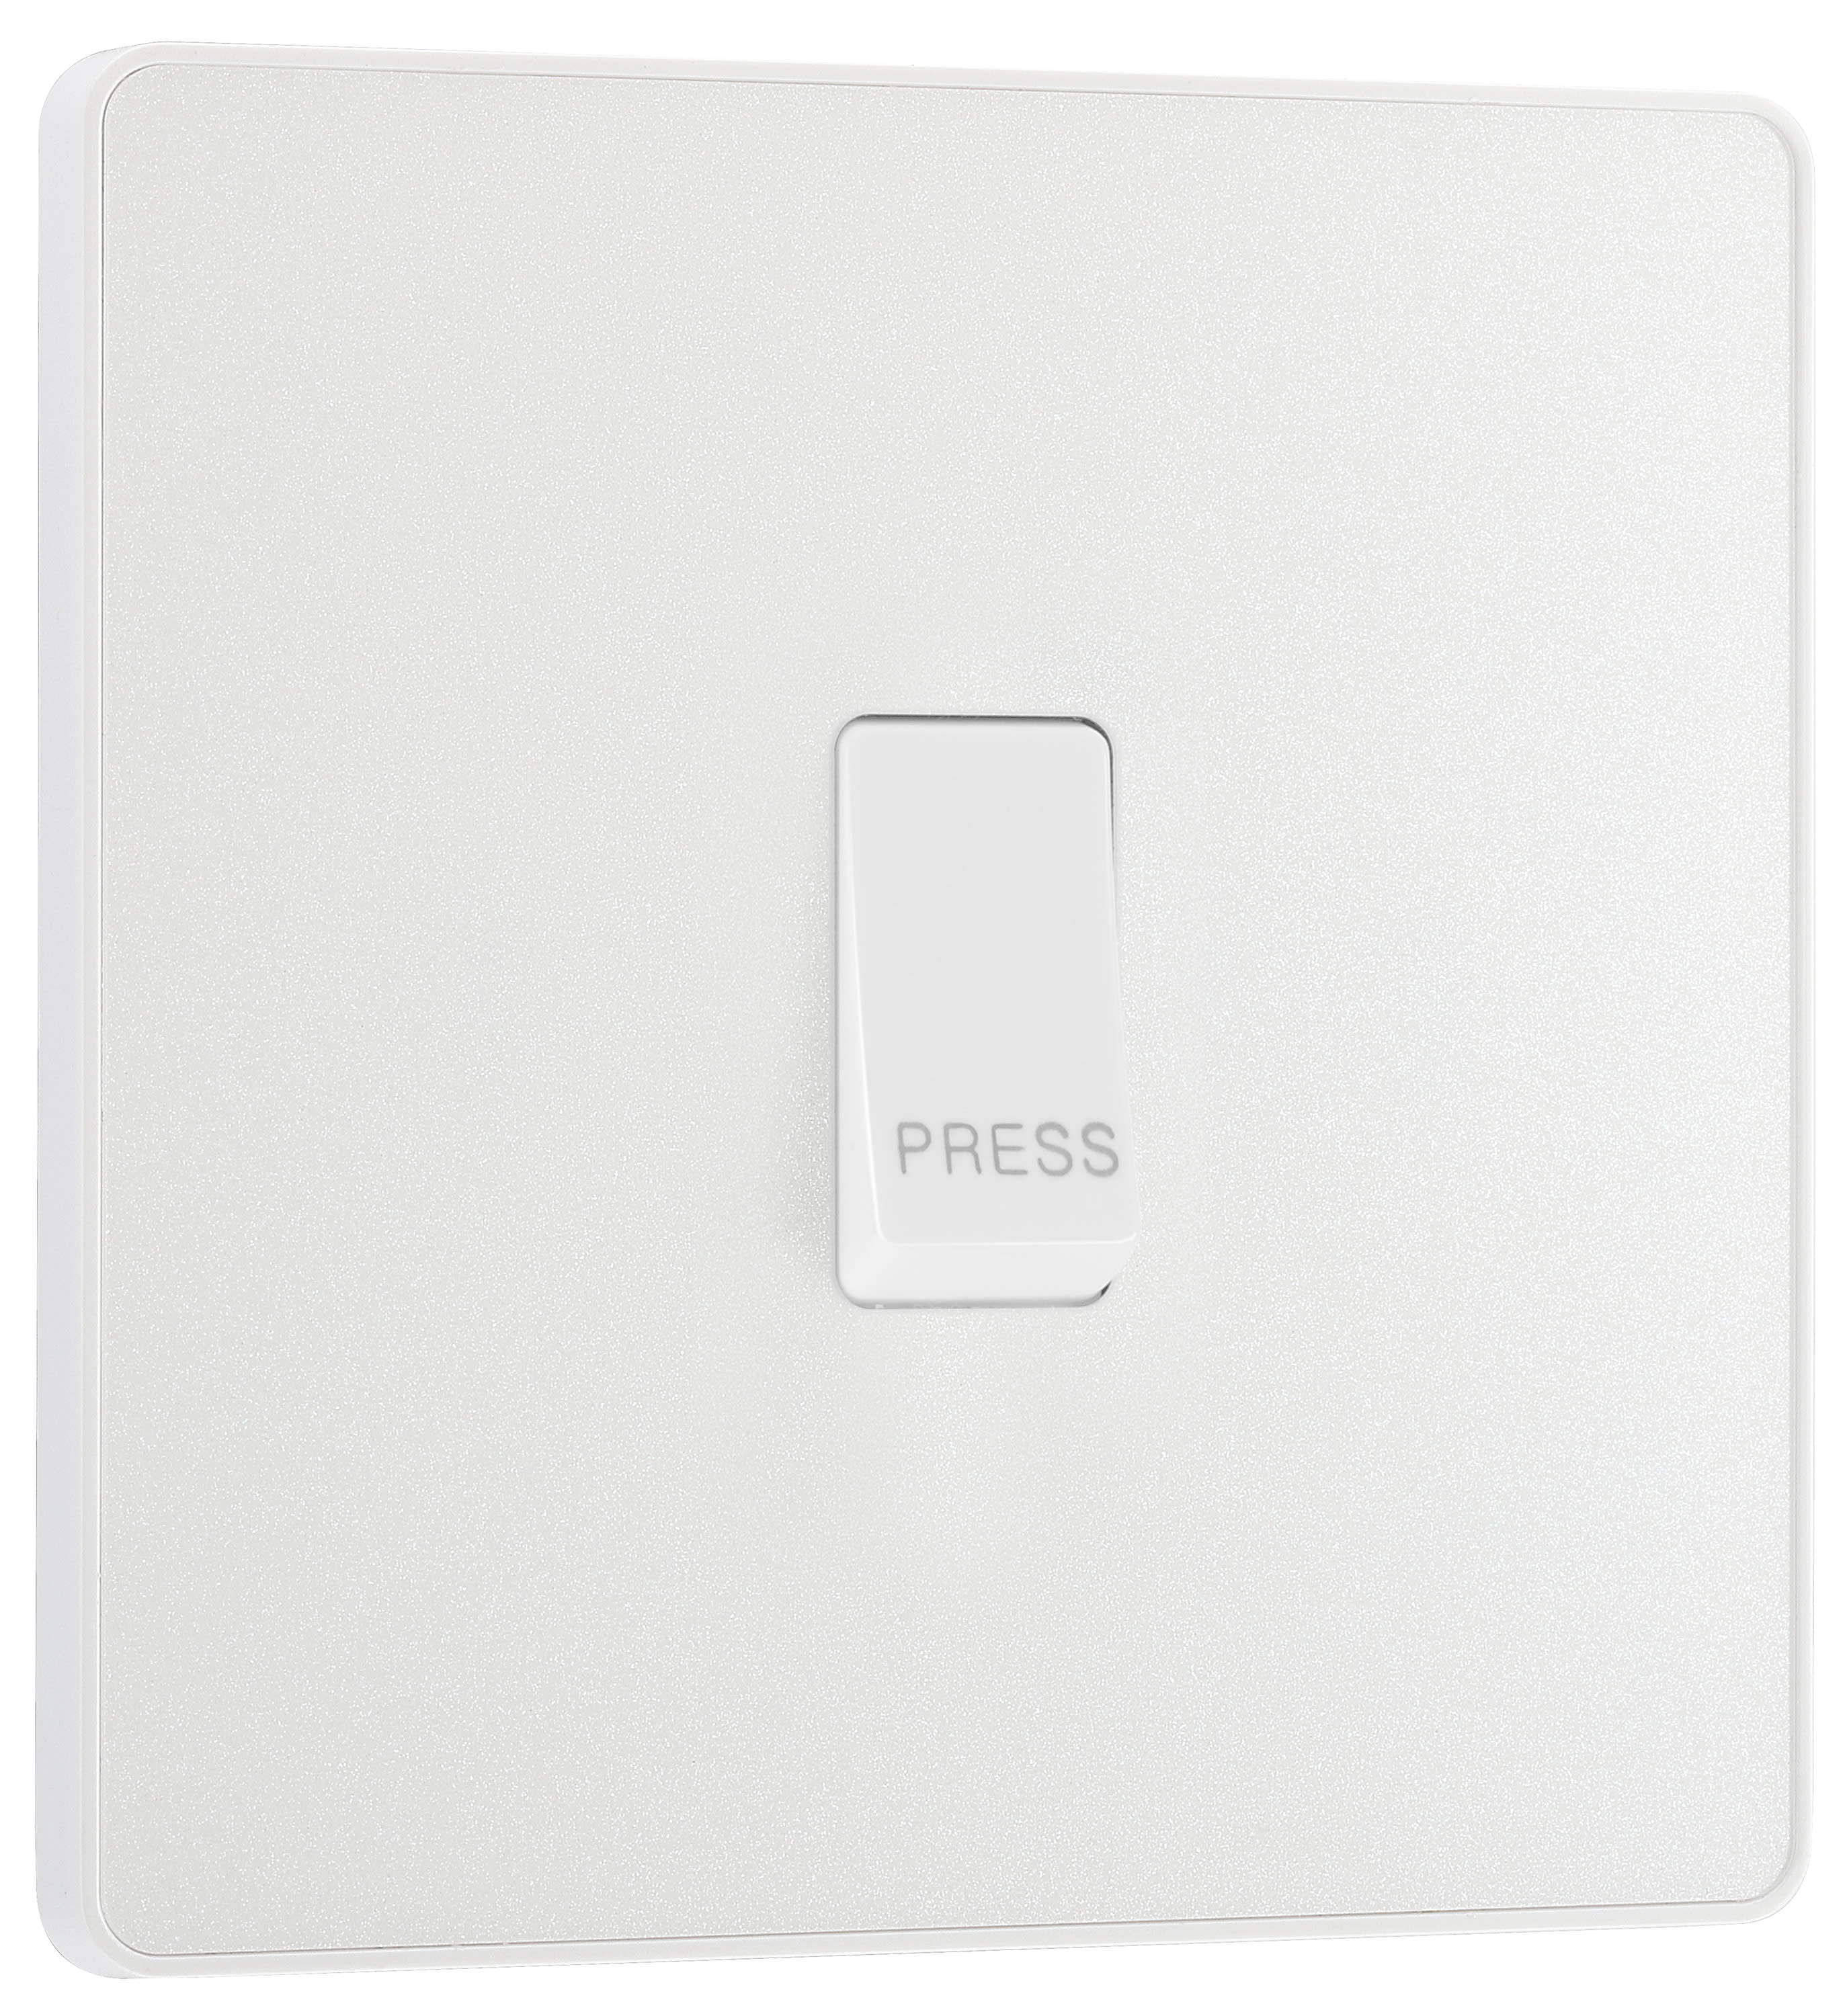 BG Evolve Pearlescent White 10A Single Press Switch